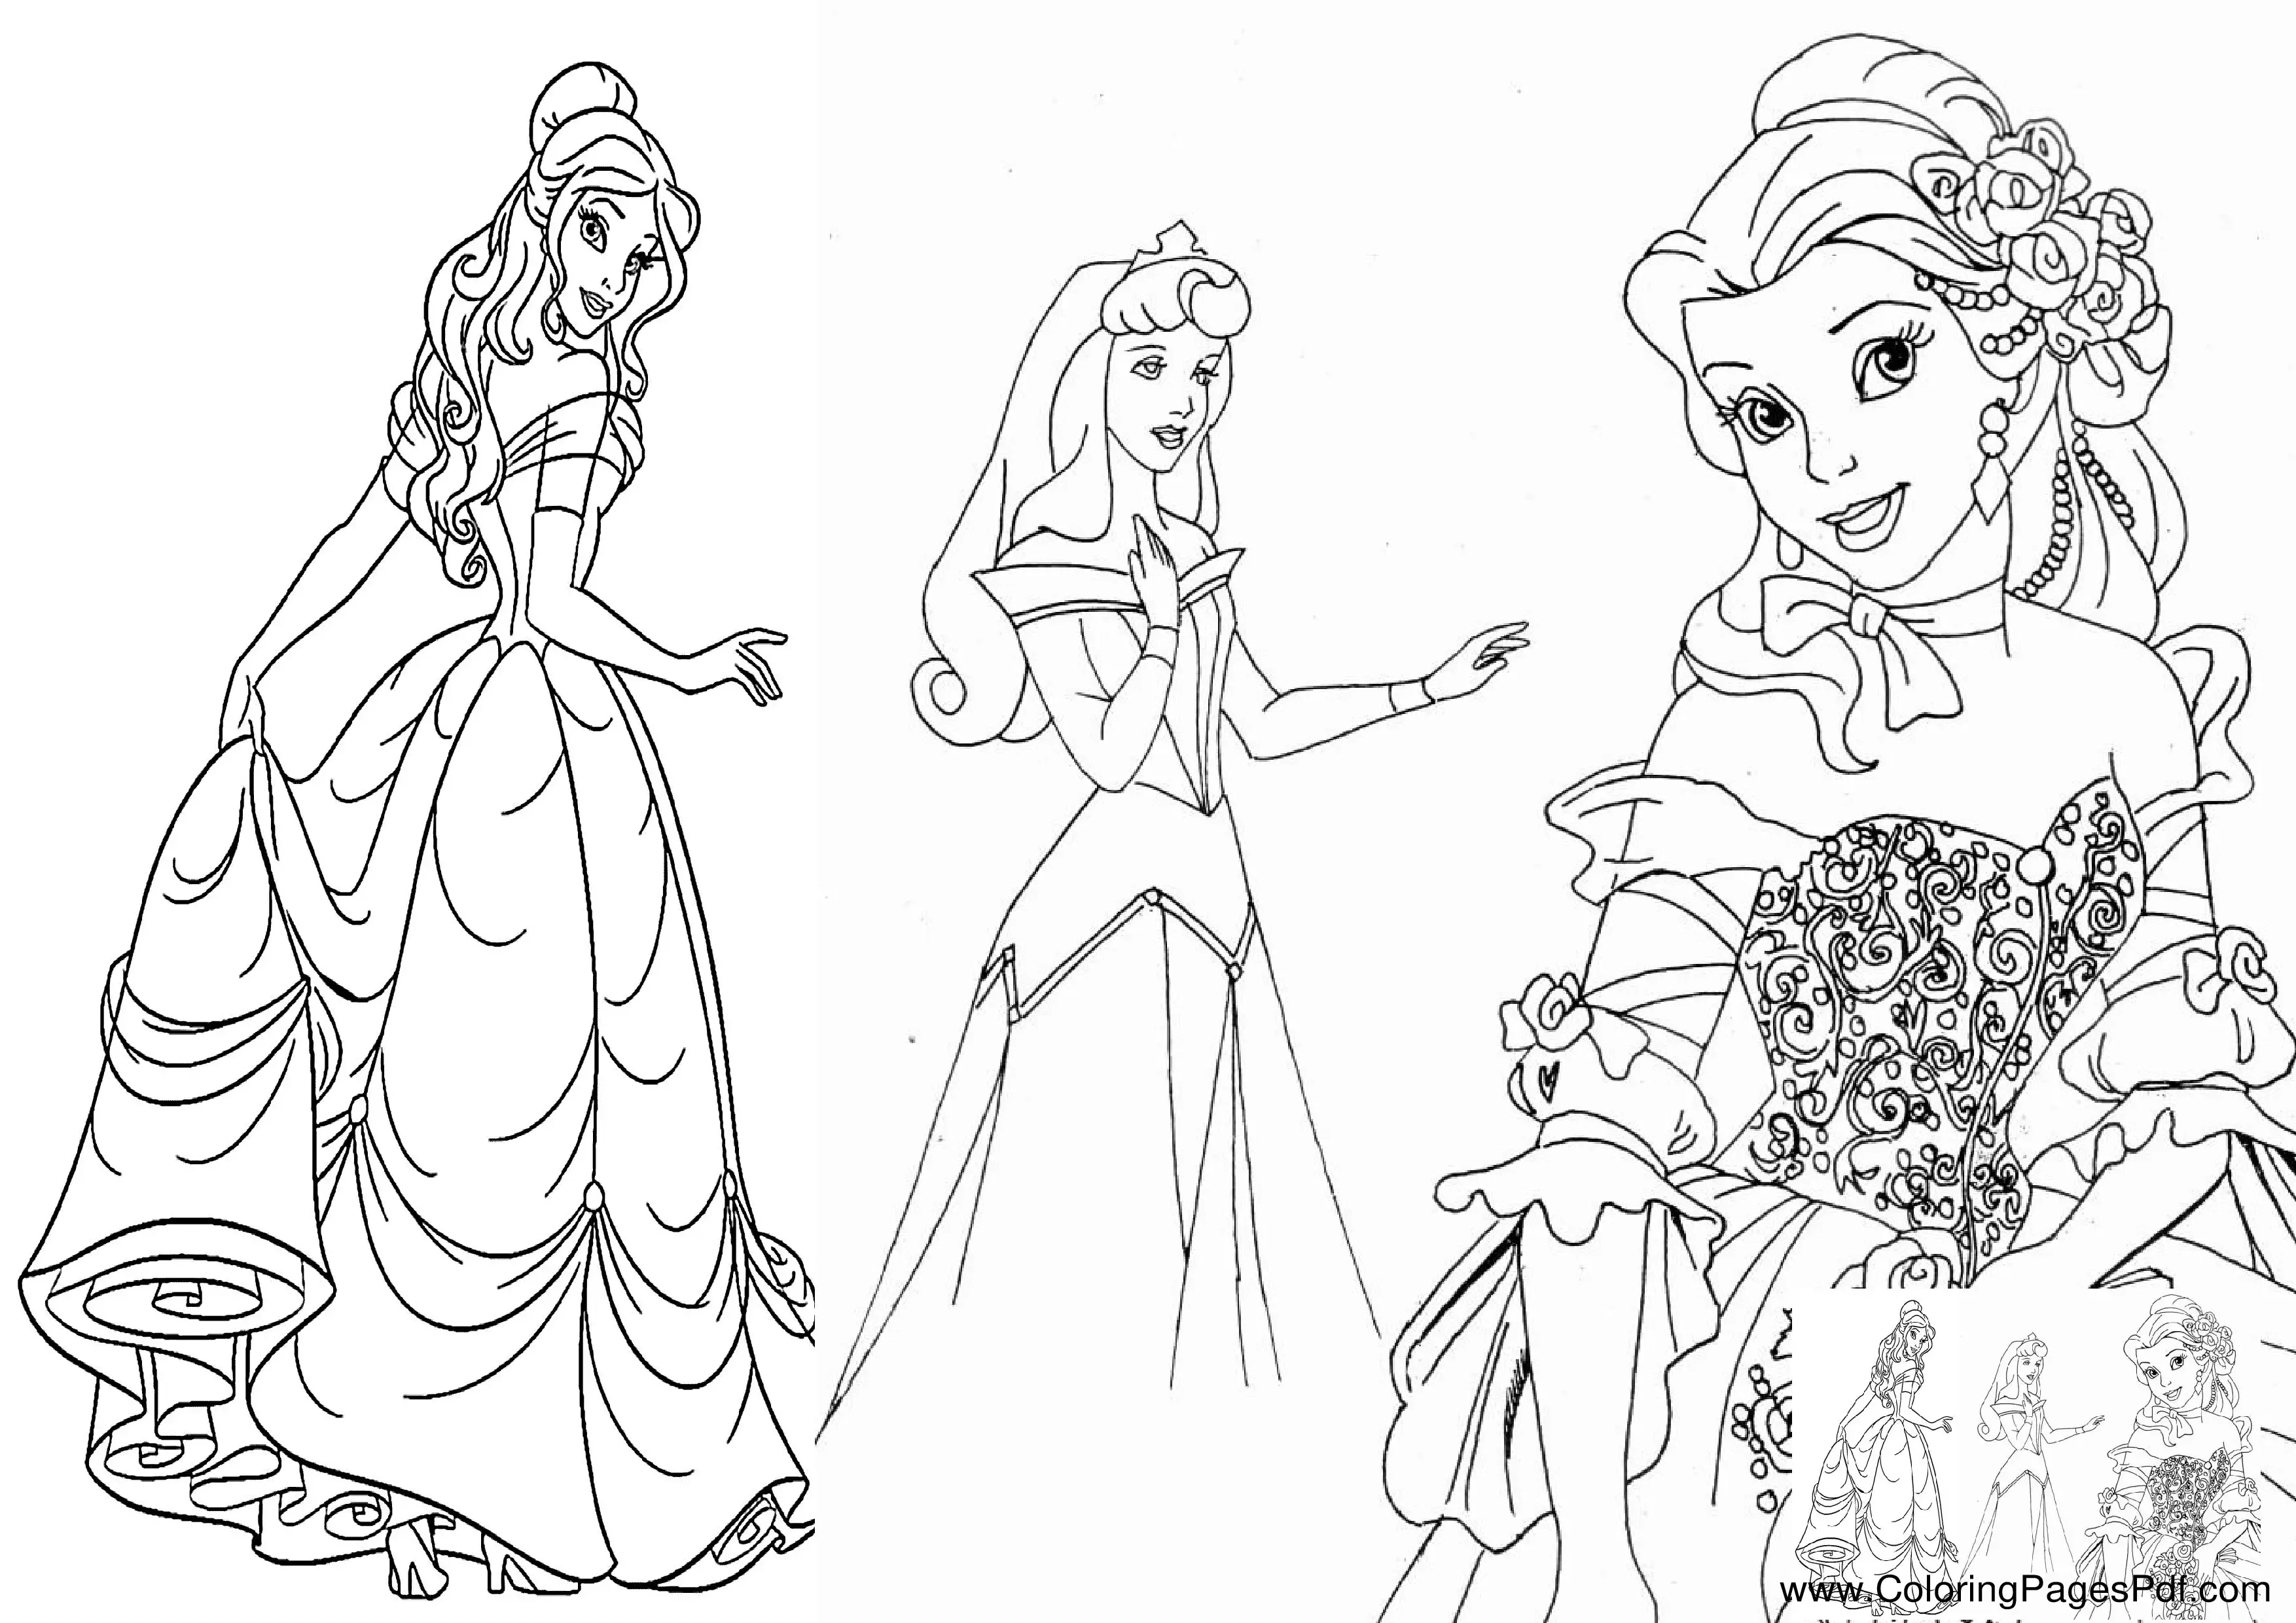 Disney princess coloring pages